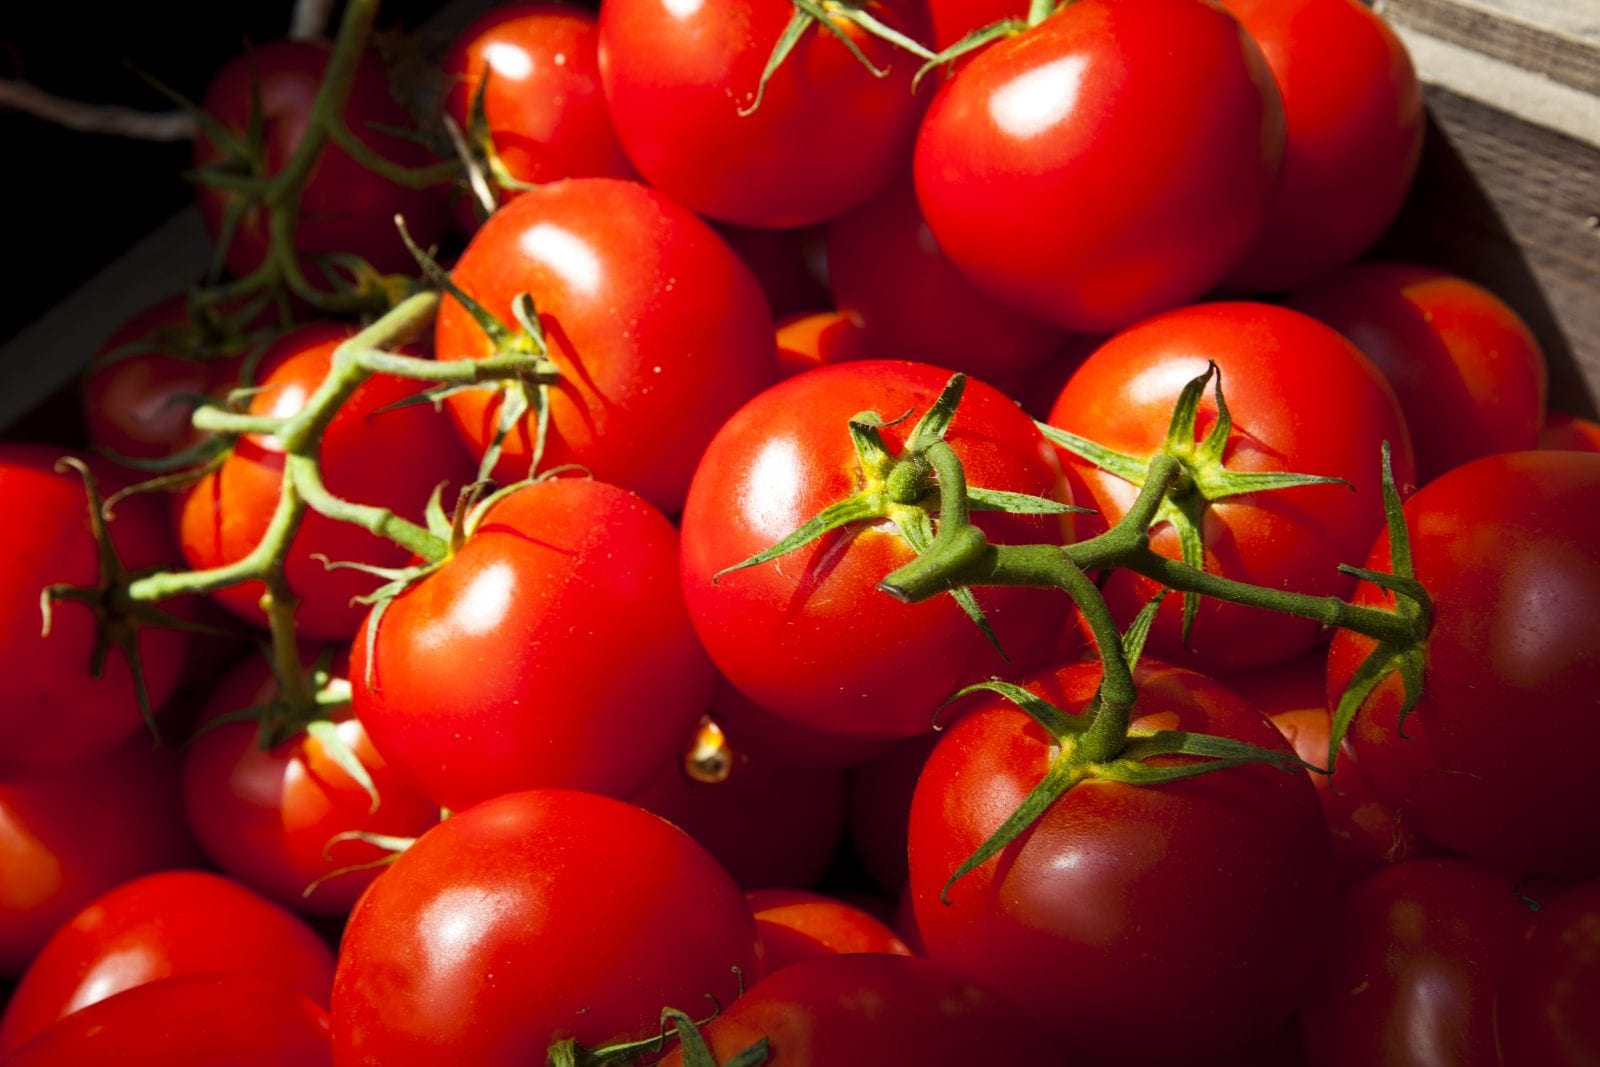 farmers-market-tomatoes